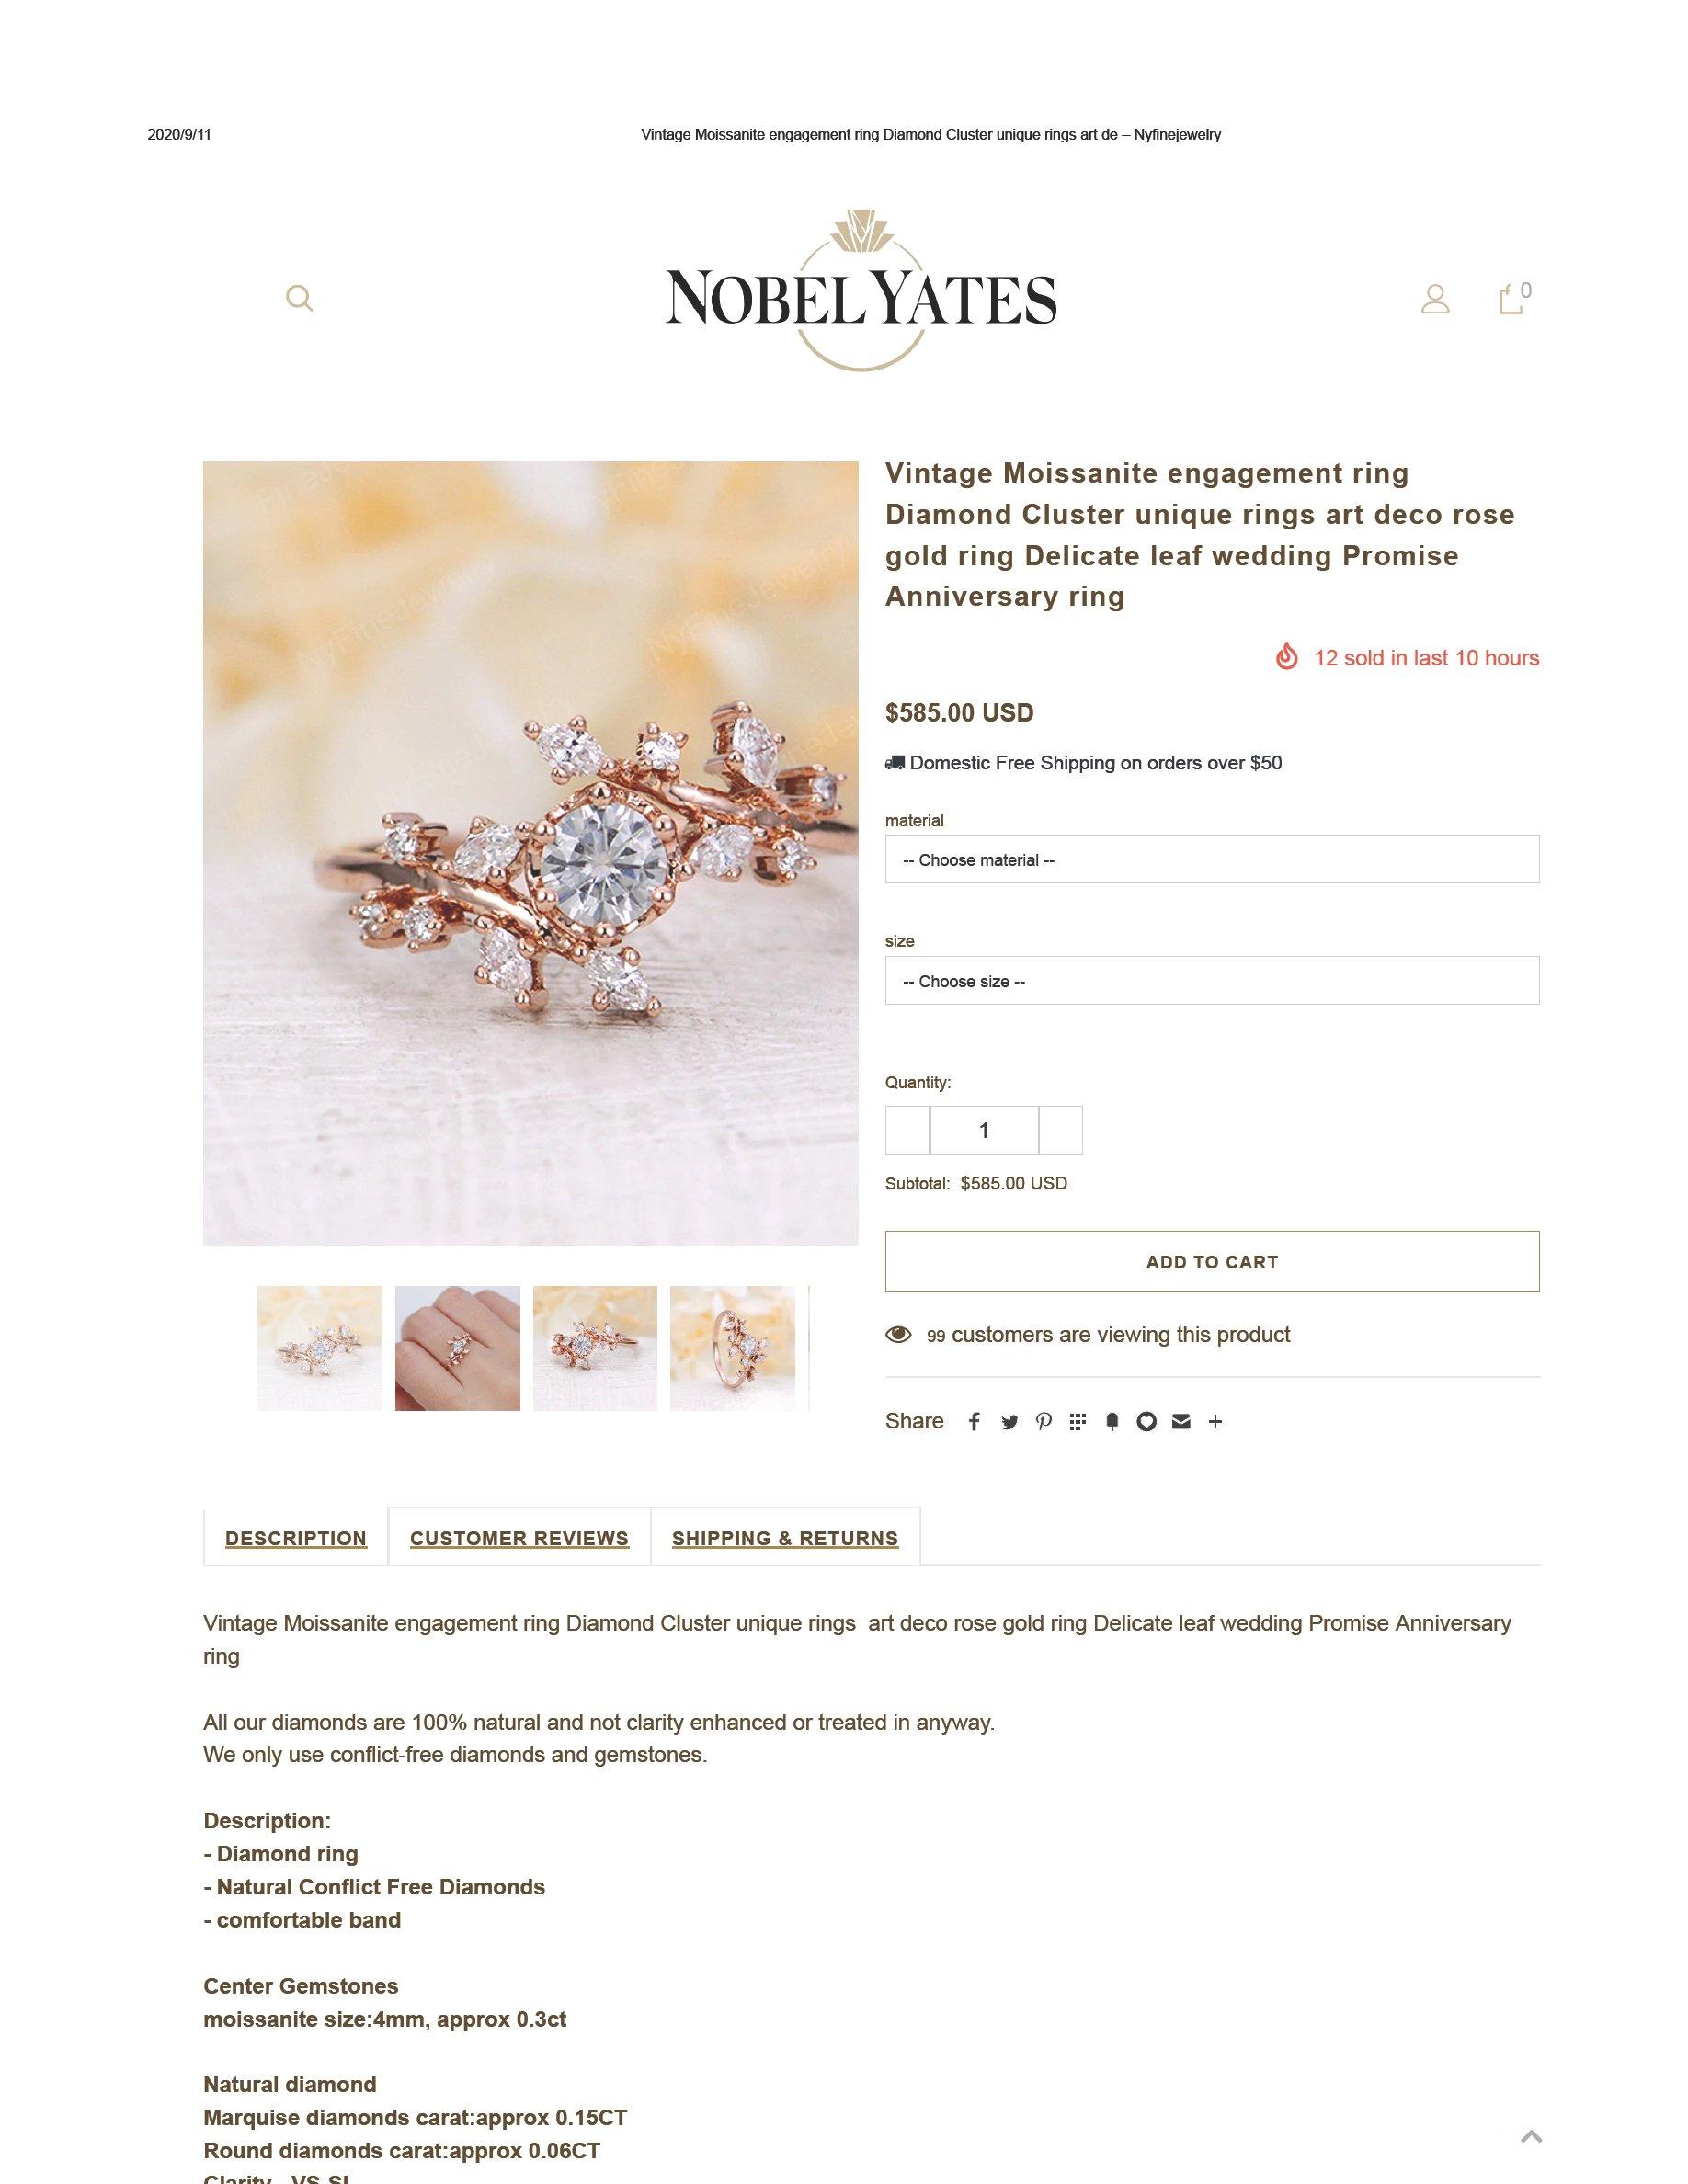 Nobel Yates Colombo Treasure Inc Trademark Registration